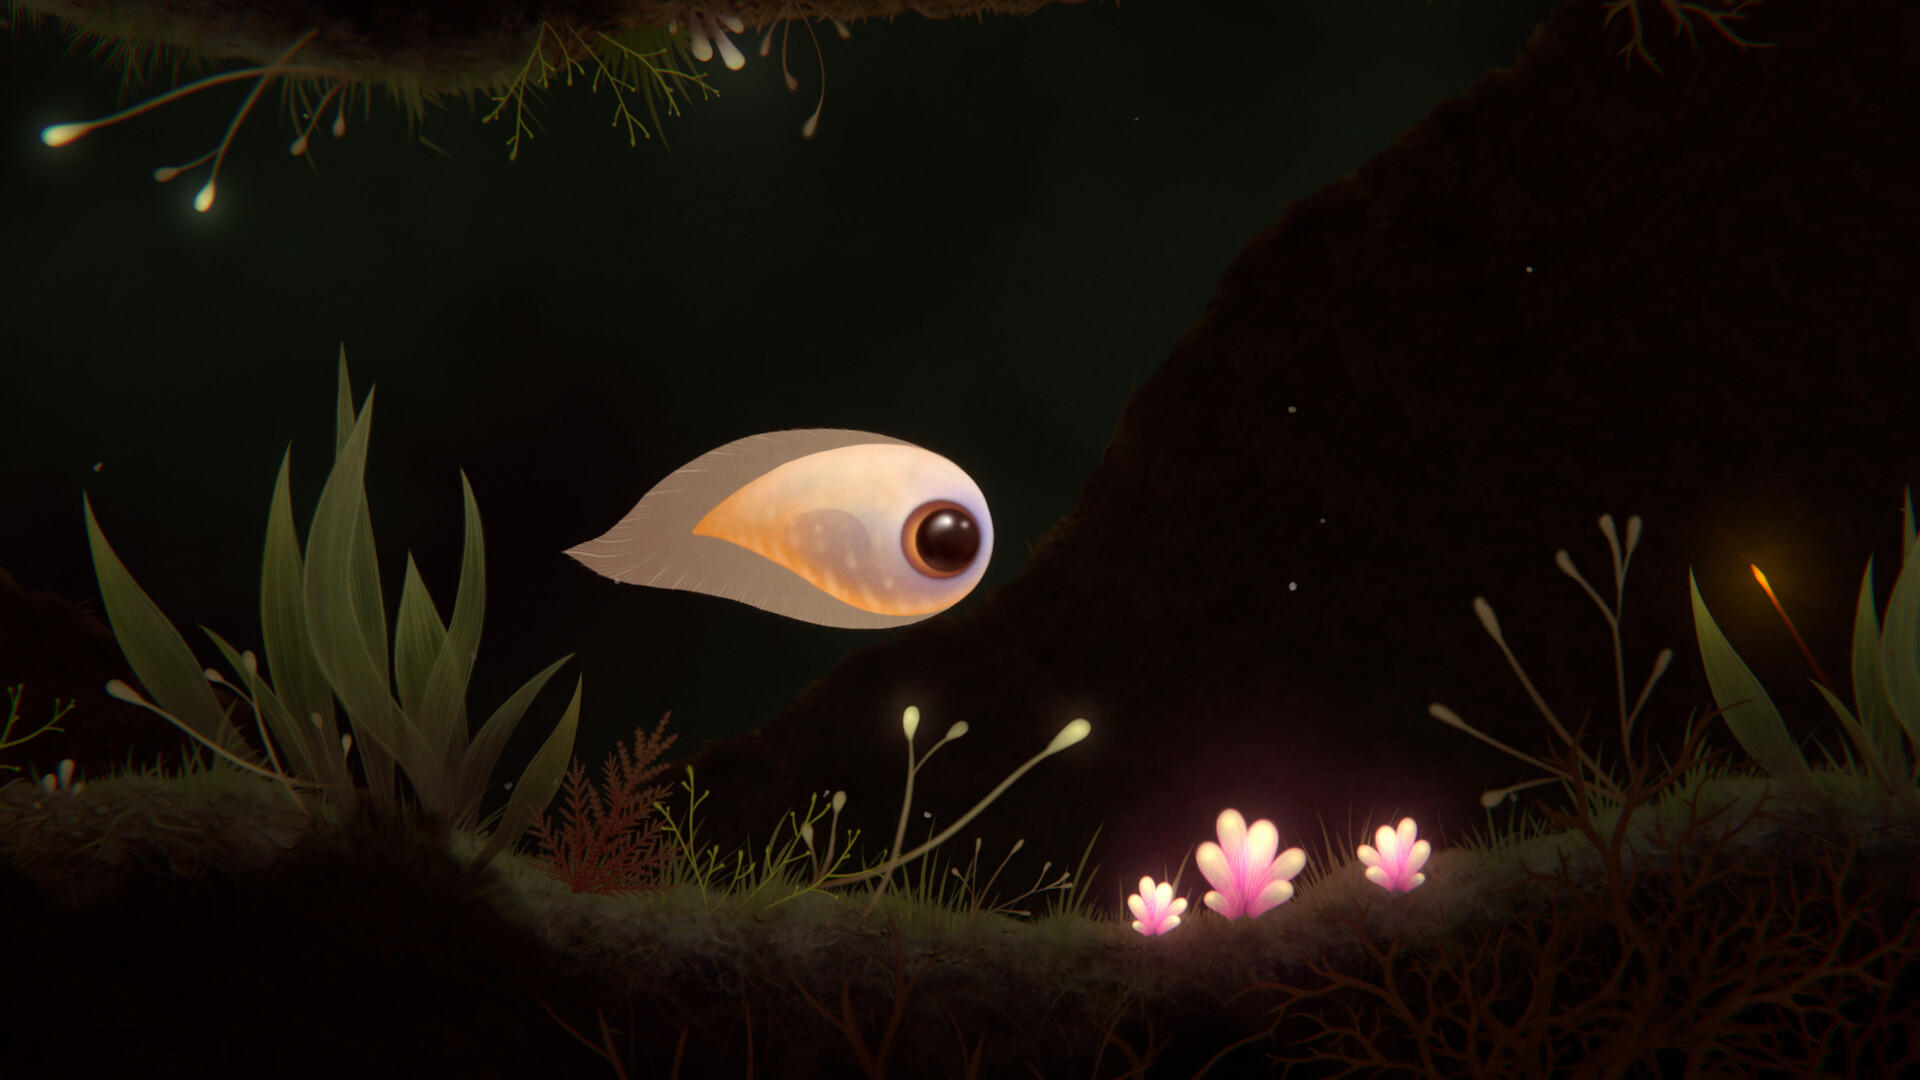 Evolution: From the little light screenshot game